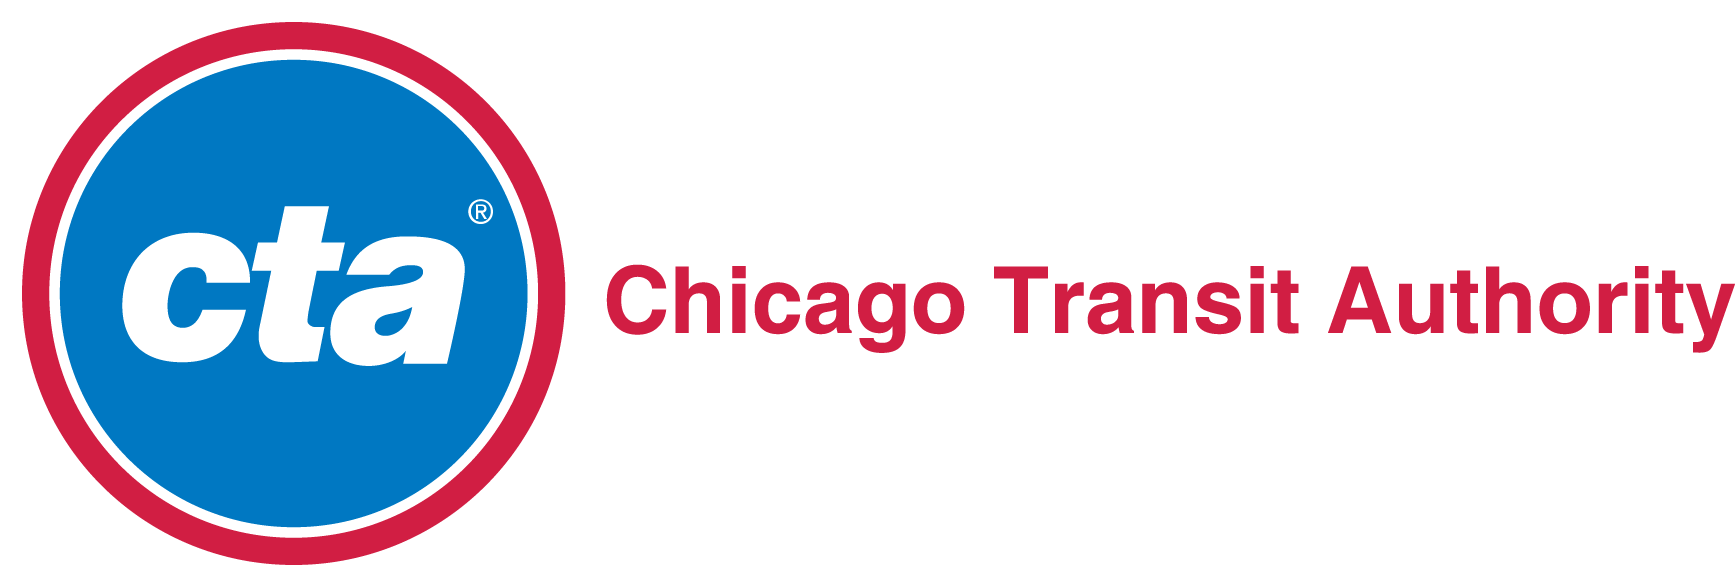 Chicago Transit Authority Logo - Chicago Transit Authority Announces Next Step Making Rail System ...